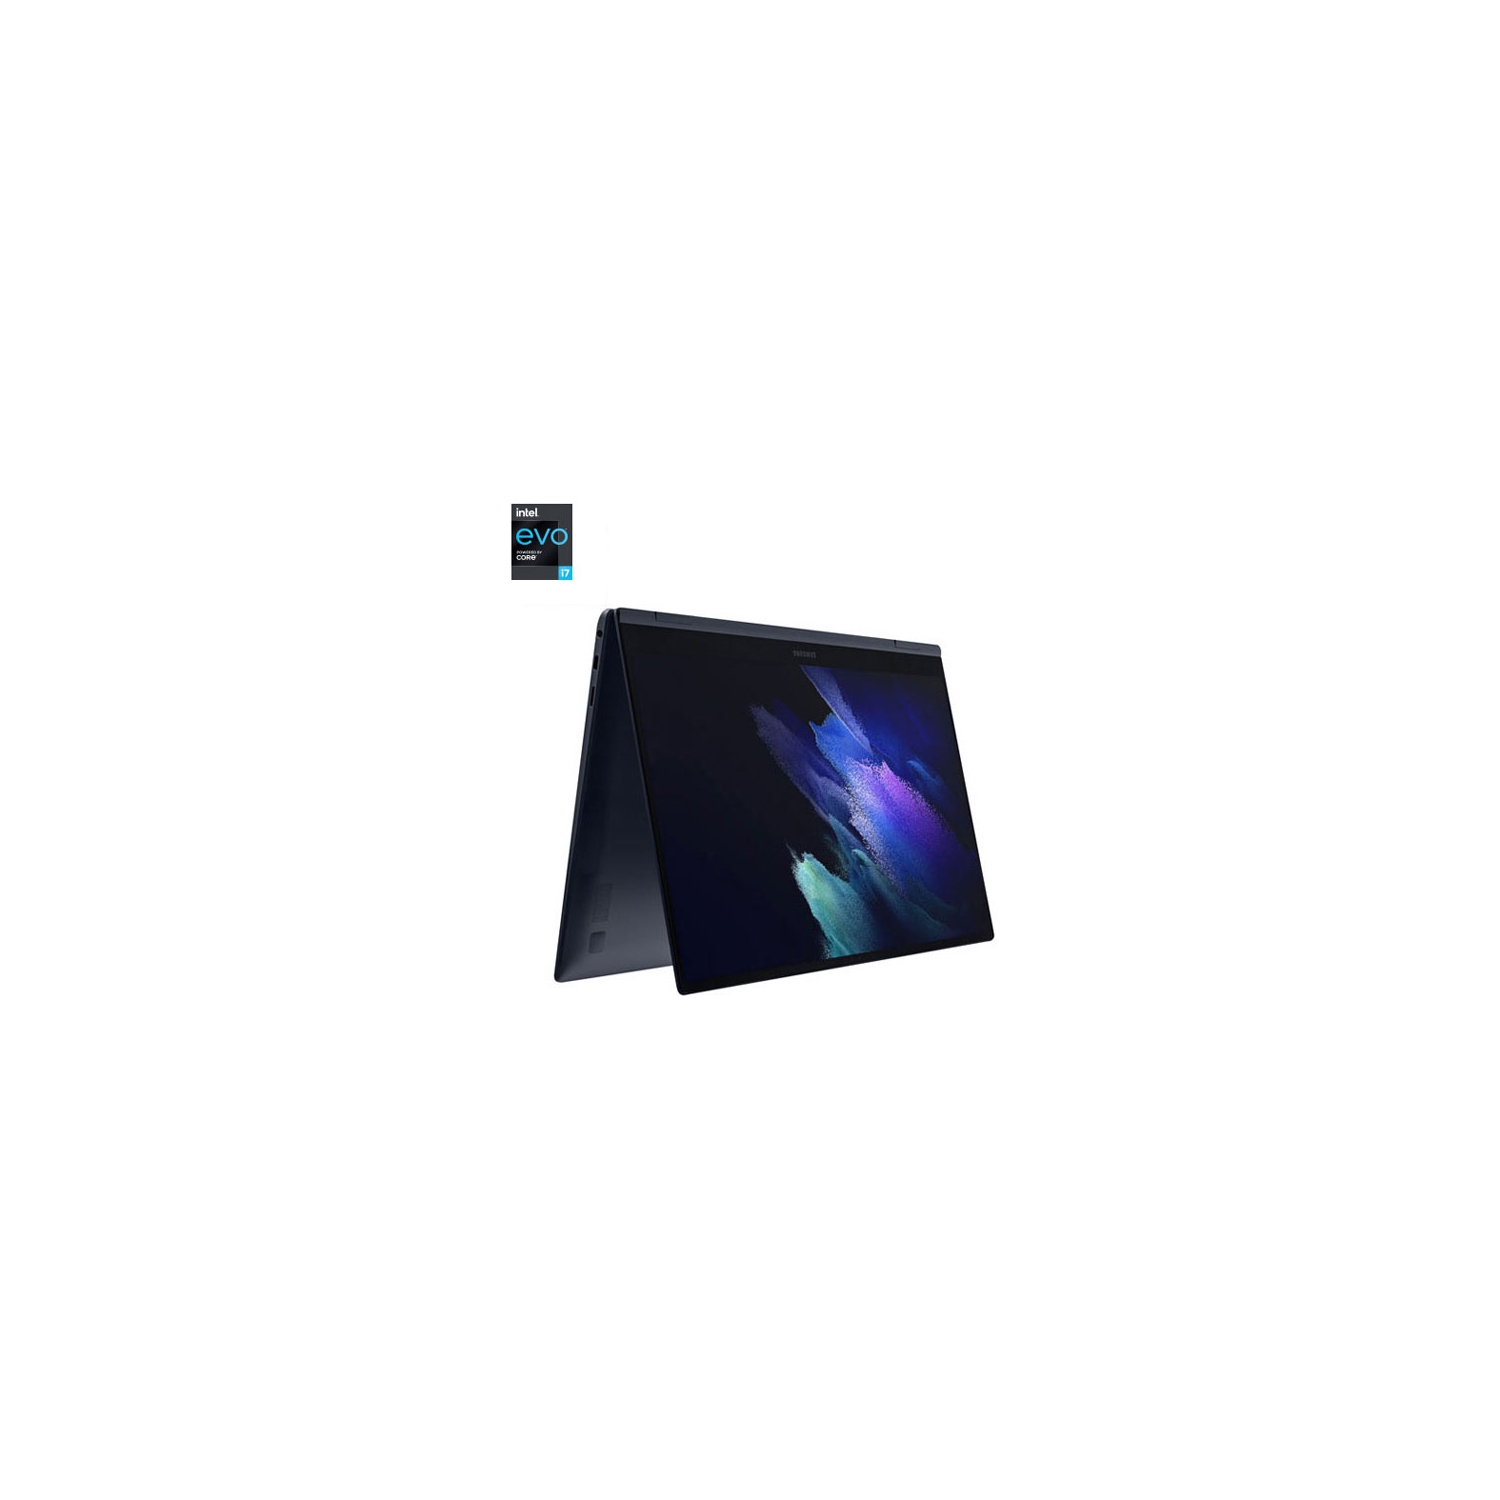 Refurbished (Excellent) - Samsung Galaxy Book Pro 360 15.6" 2-in-1 Laptop - Navy (Intel Evo i7-1165G7/512GB SSD/8GB RAM/Win 11)